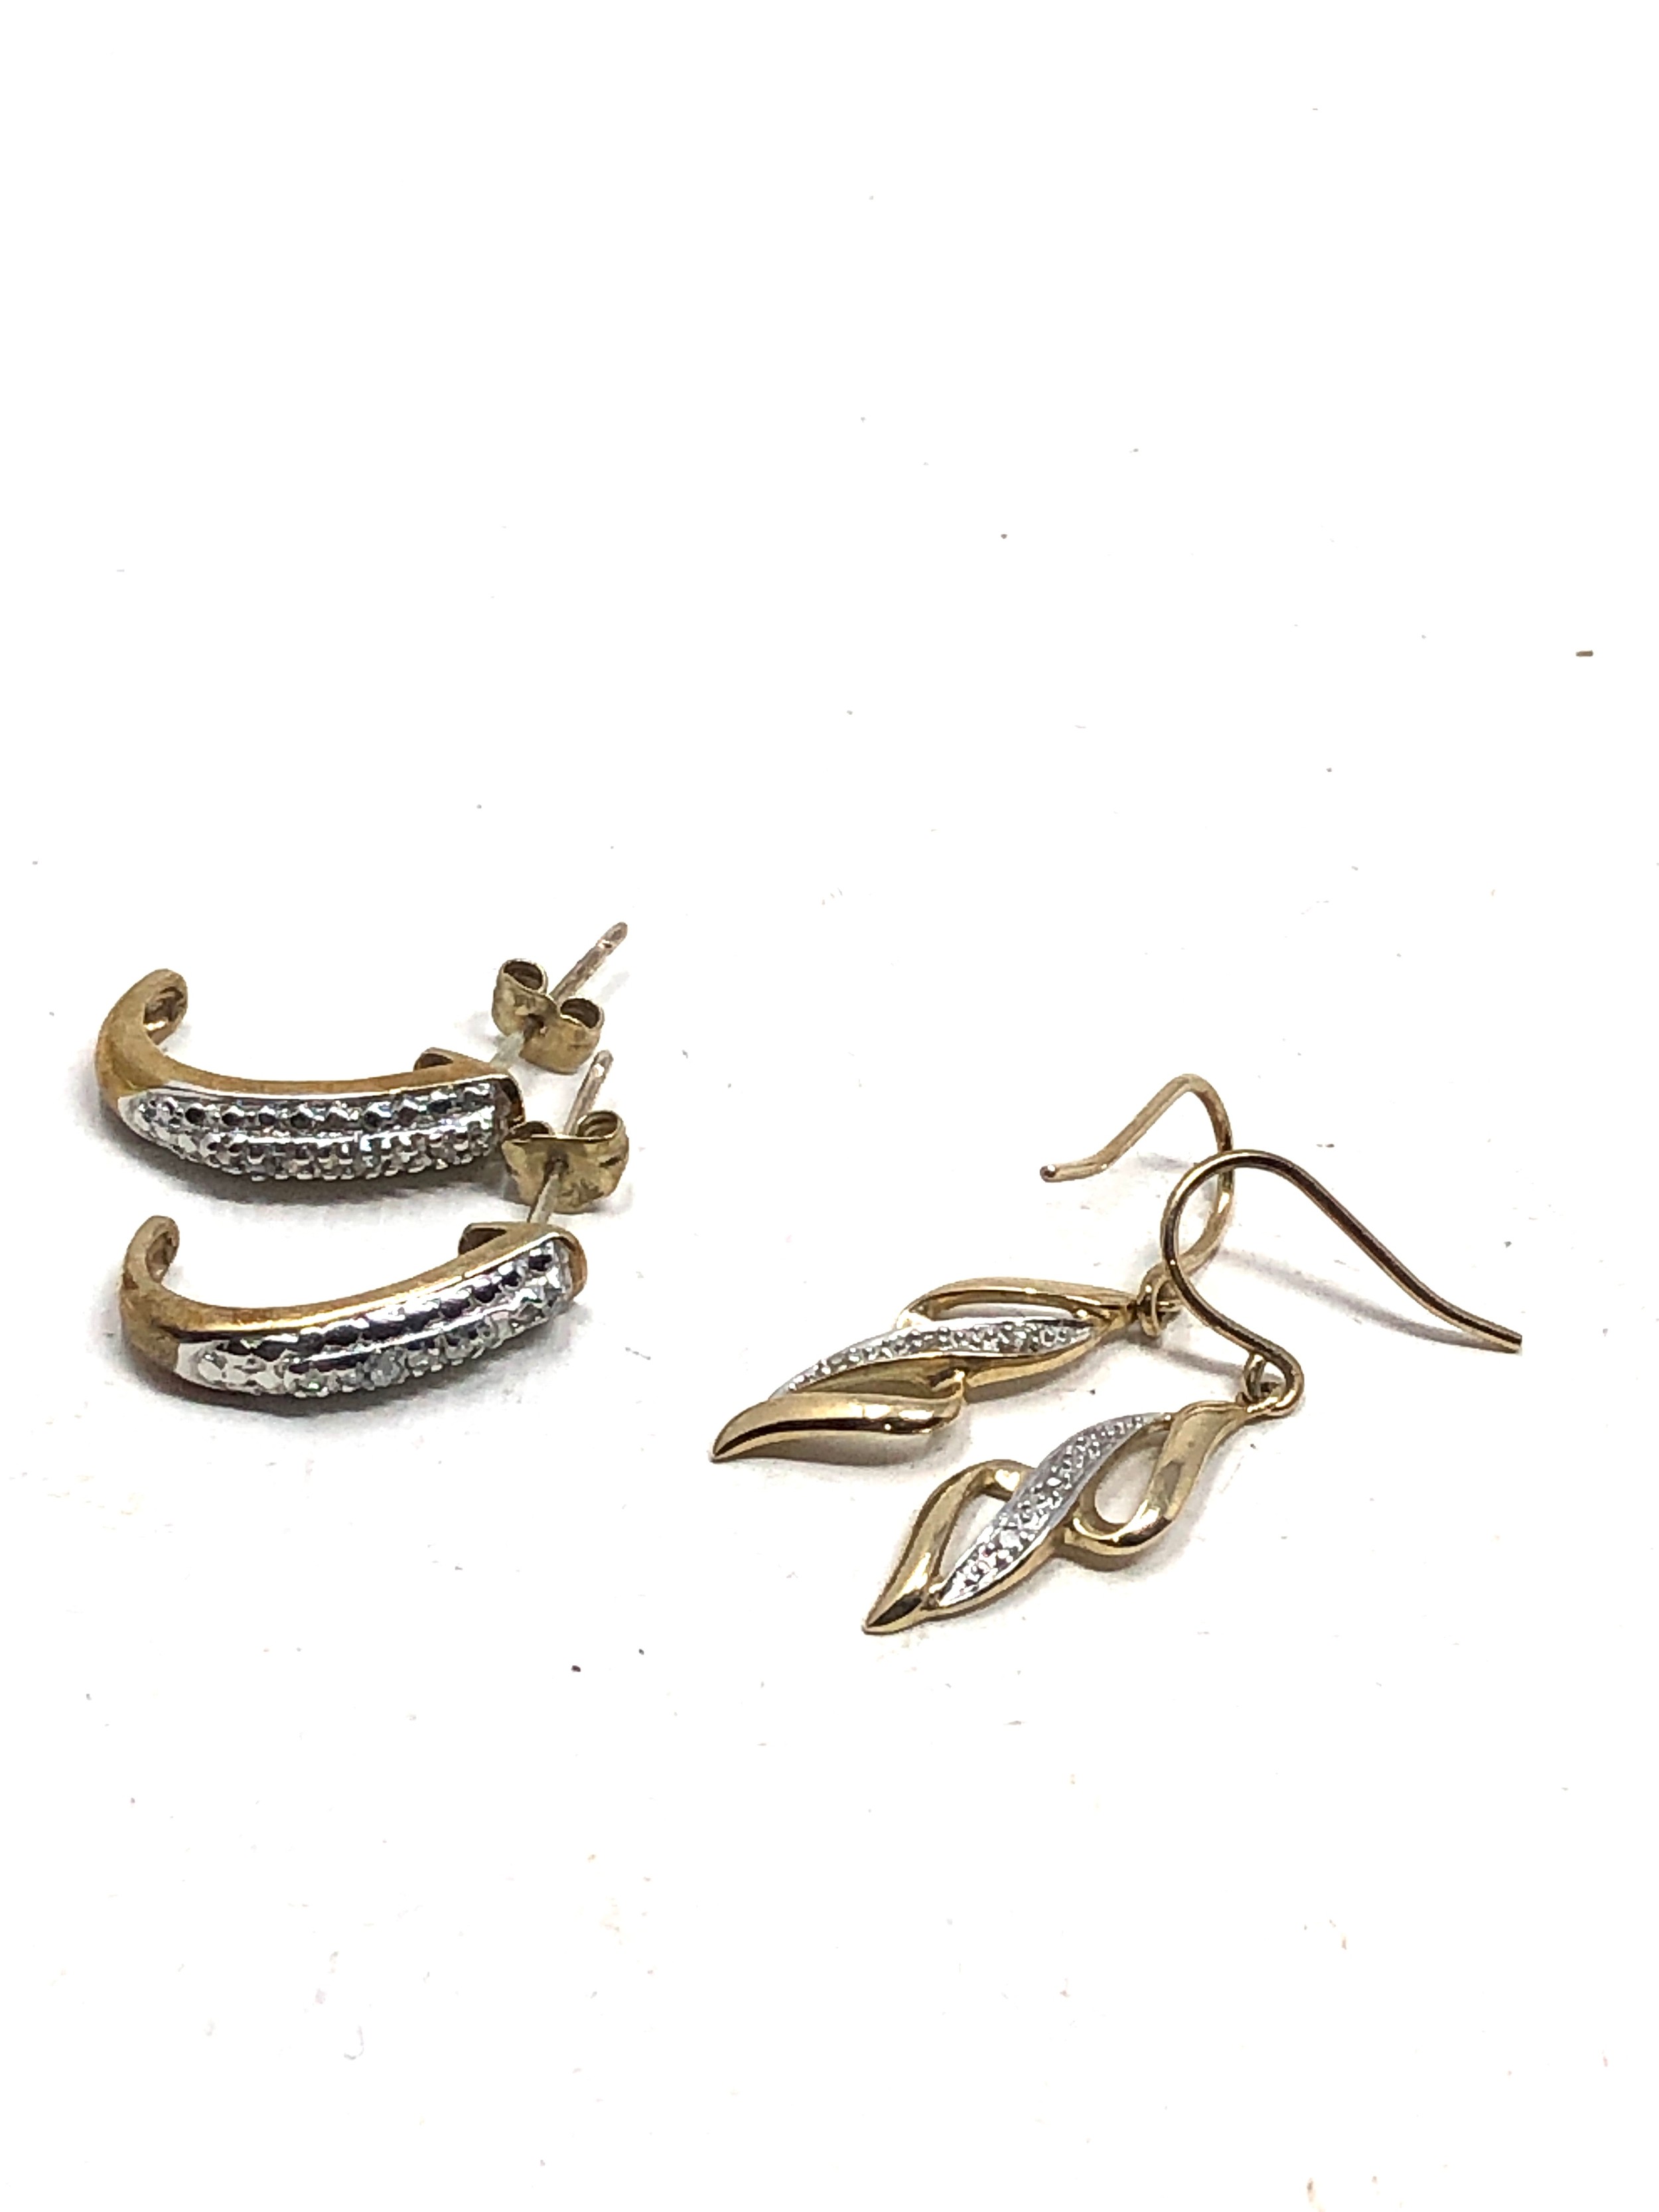 2 x 9ct gold vintage diamond drop earrings (3.2g) - Image 3 of 3